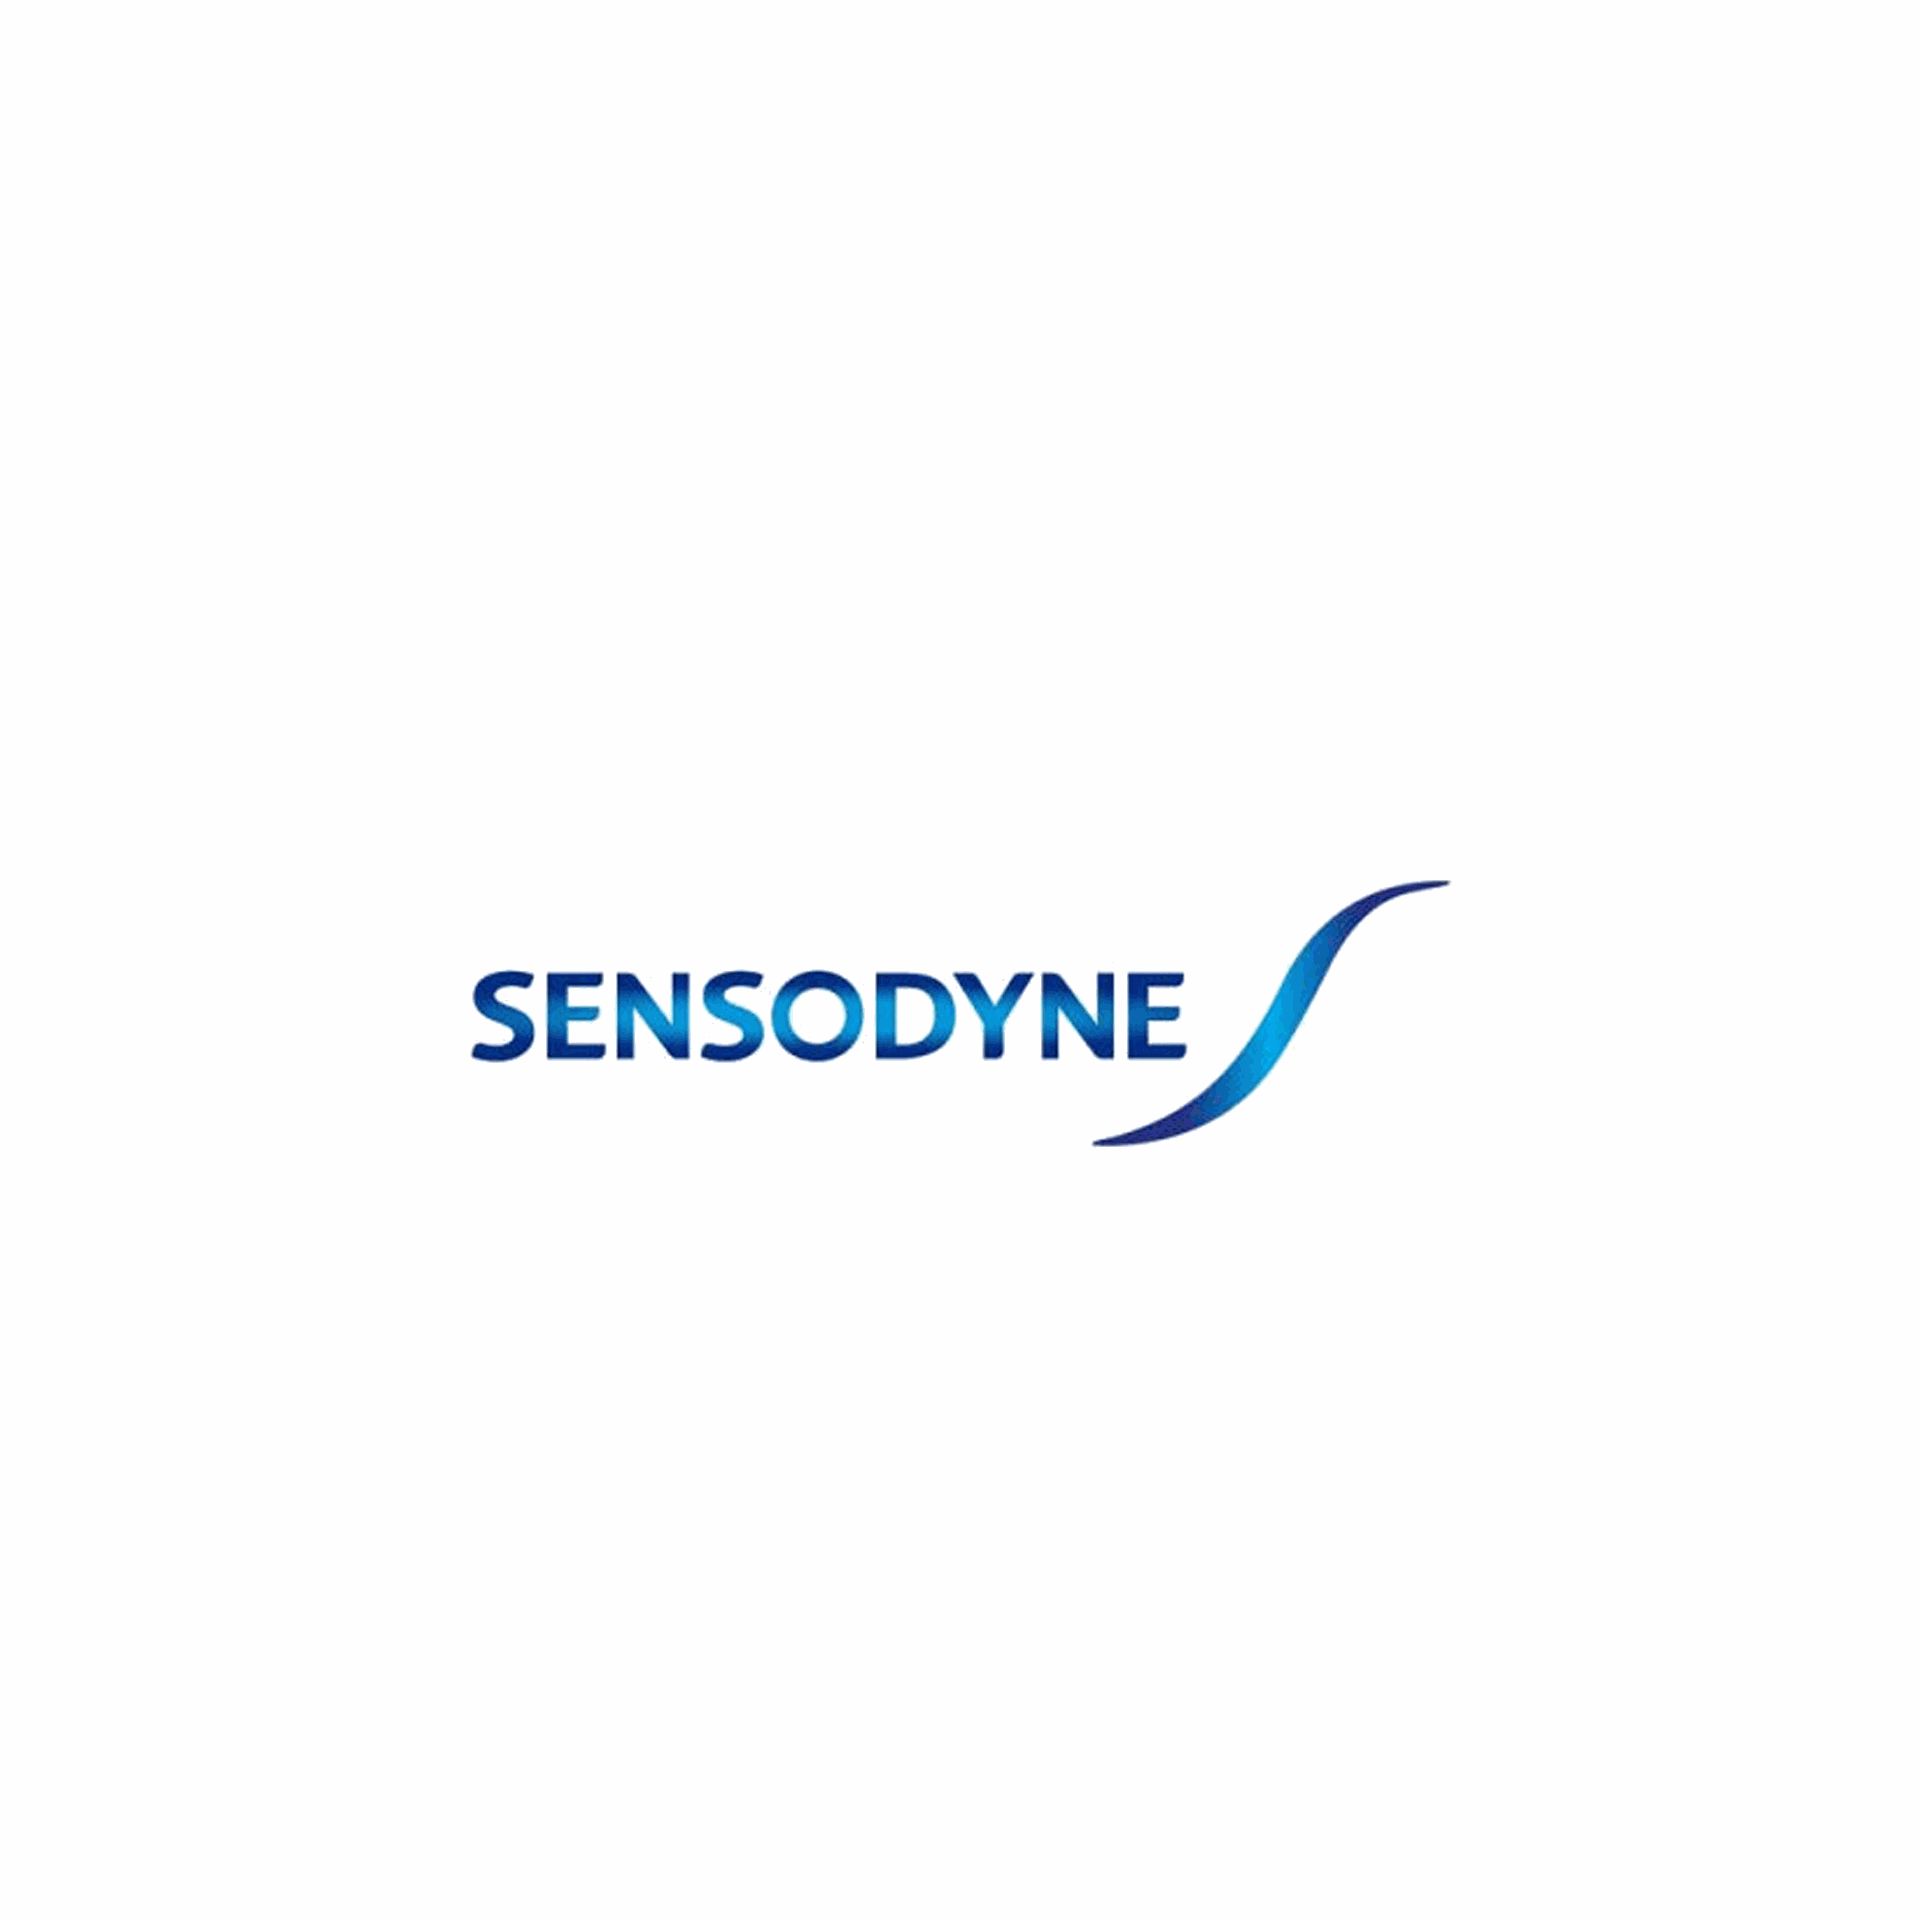 Product Brand: Sensodyne